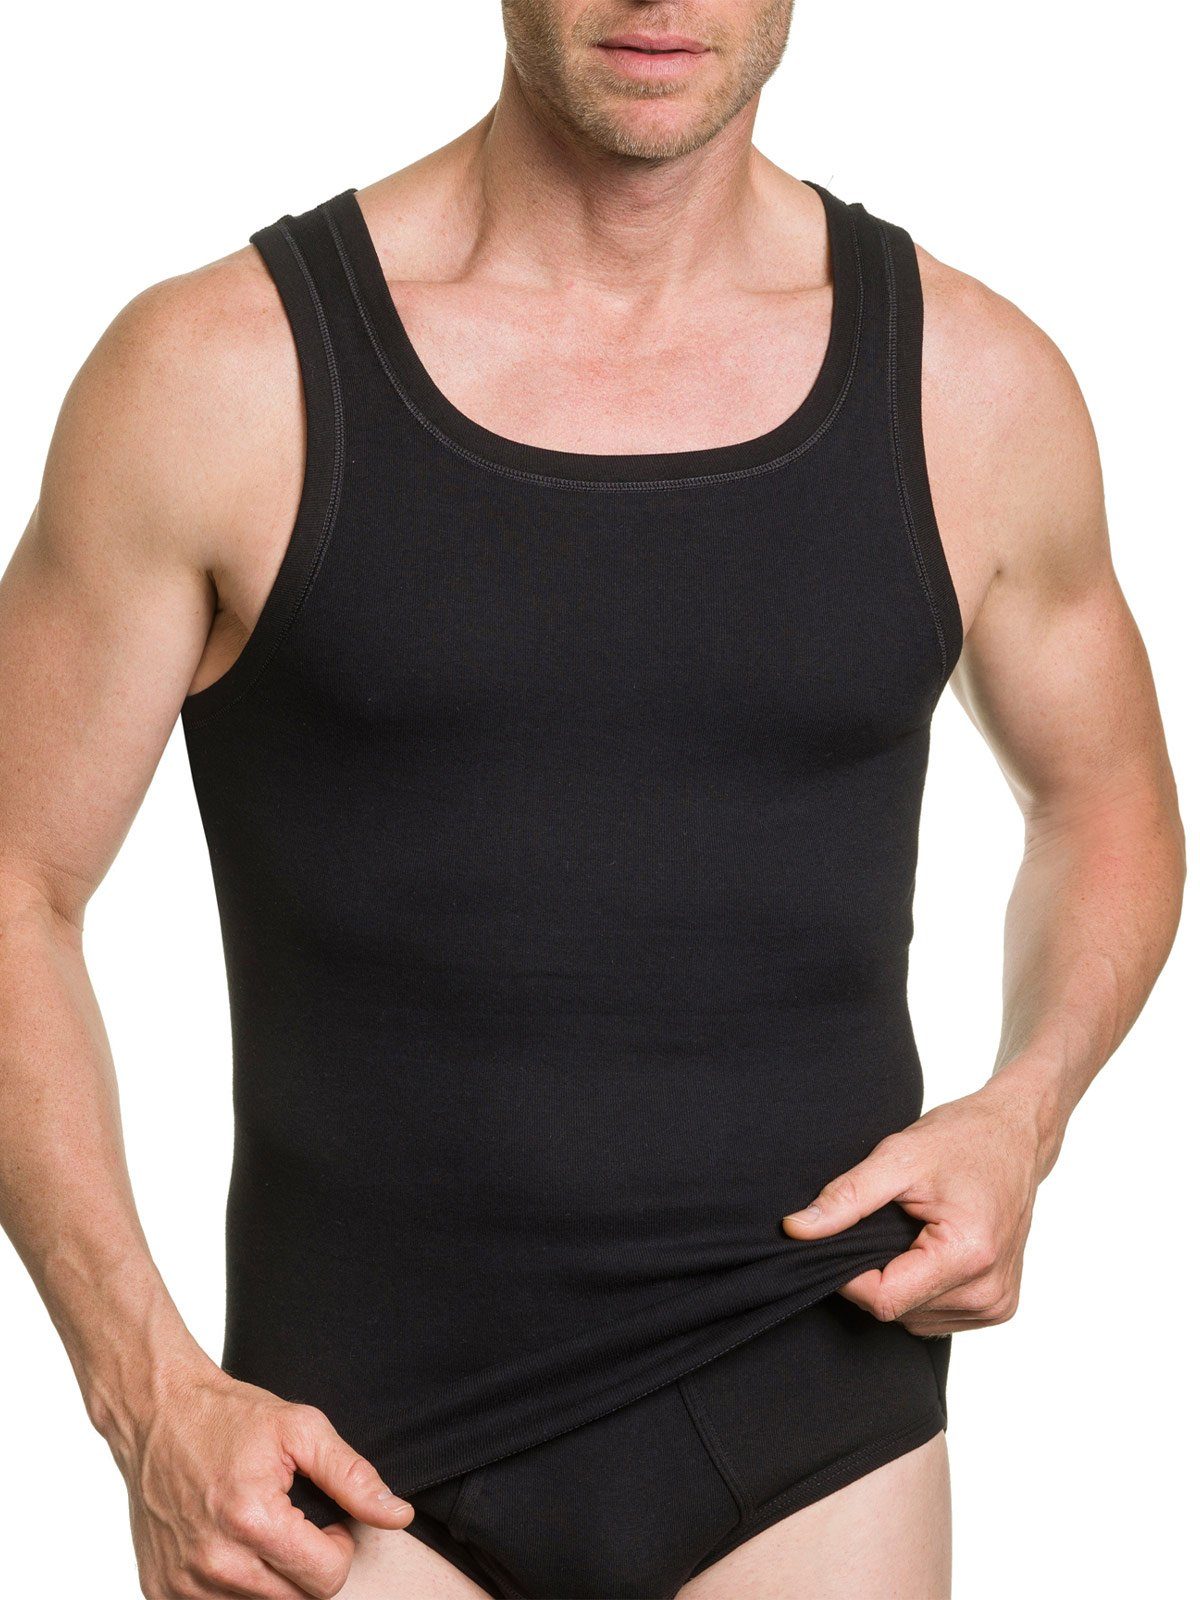 KUMPF Achselhemd Feinripp (Stück, hohe 1-St) Markenqualität Herren schwarz Unterhemd